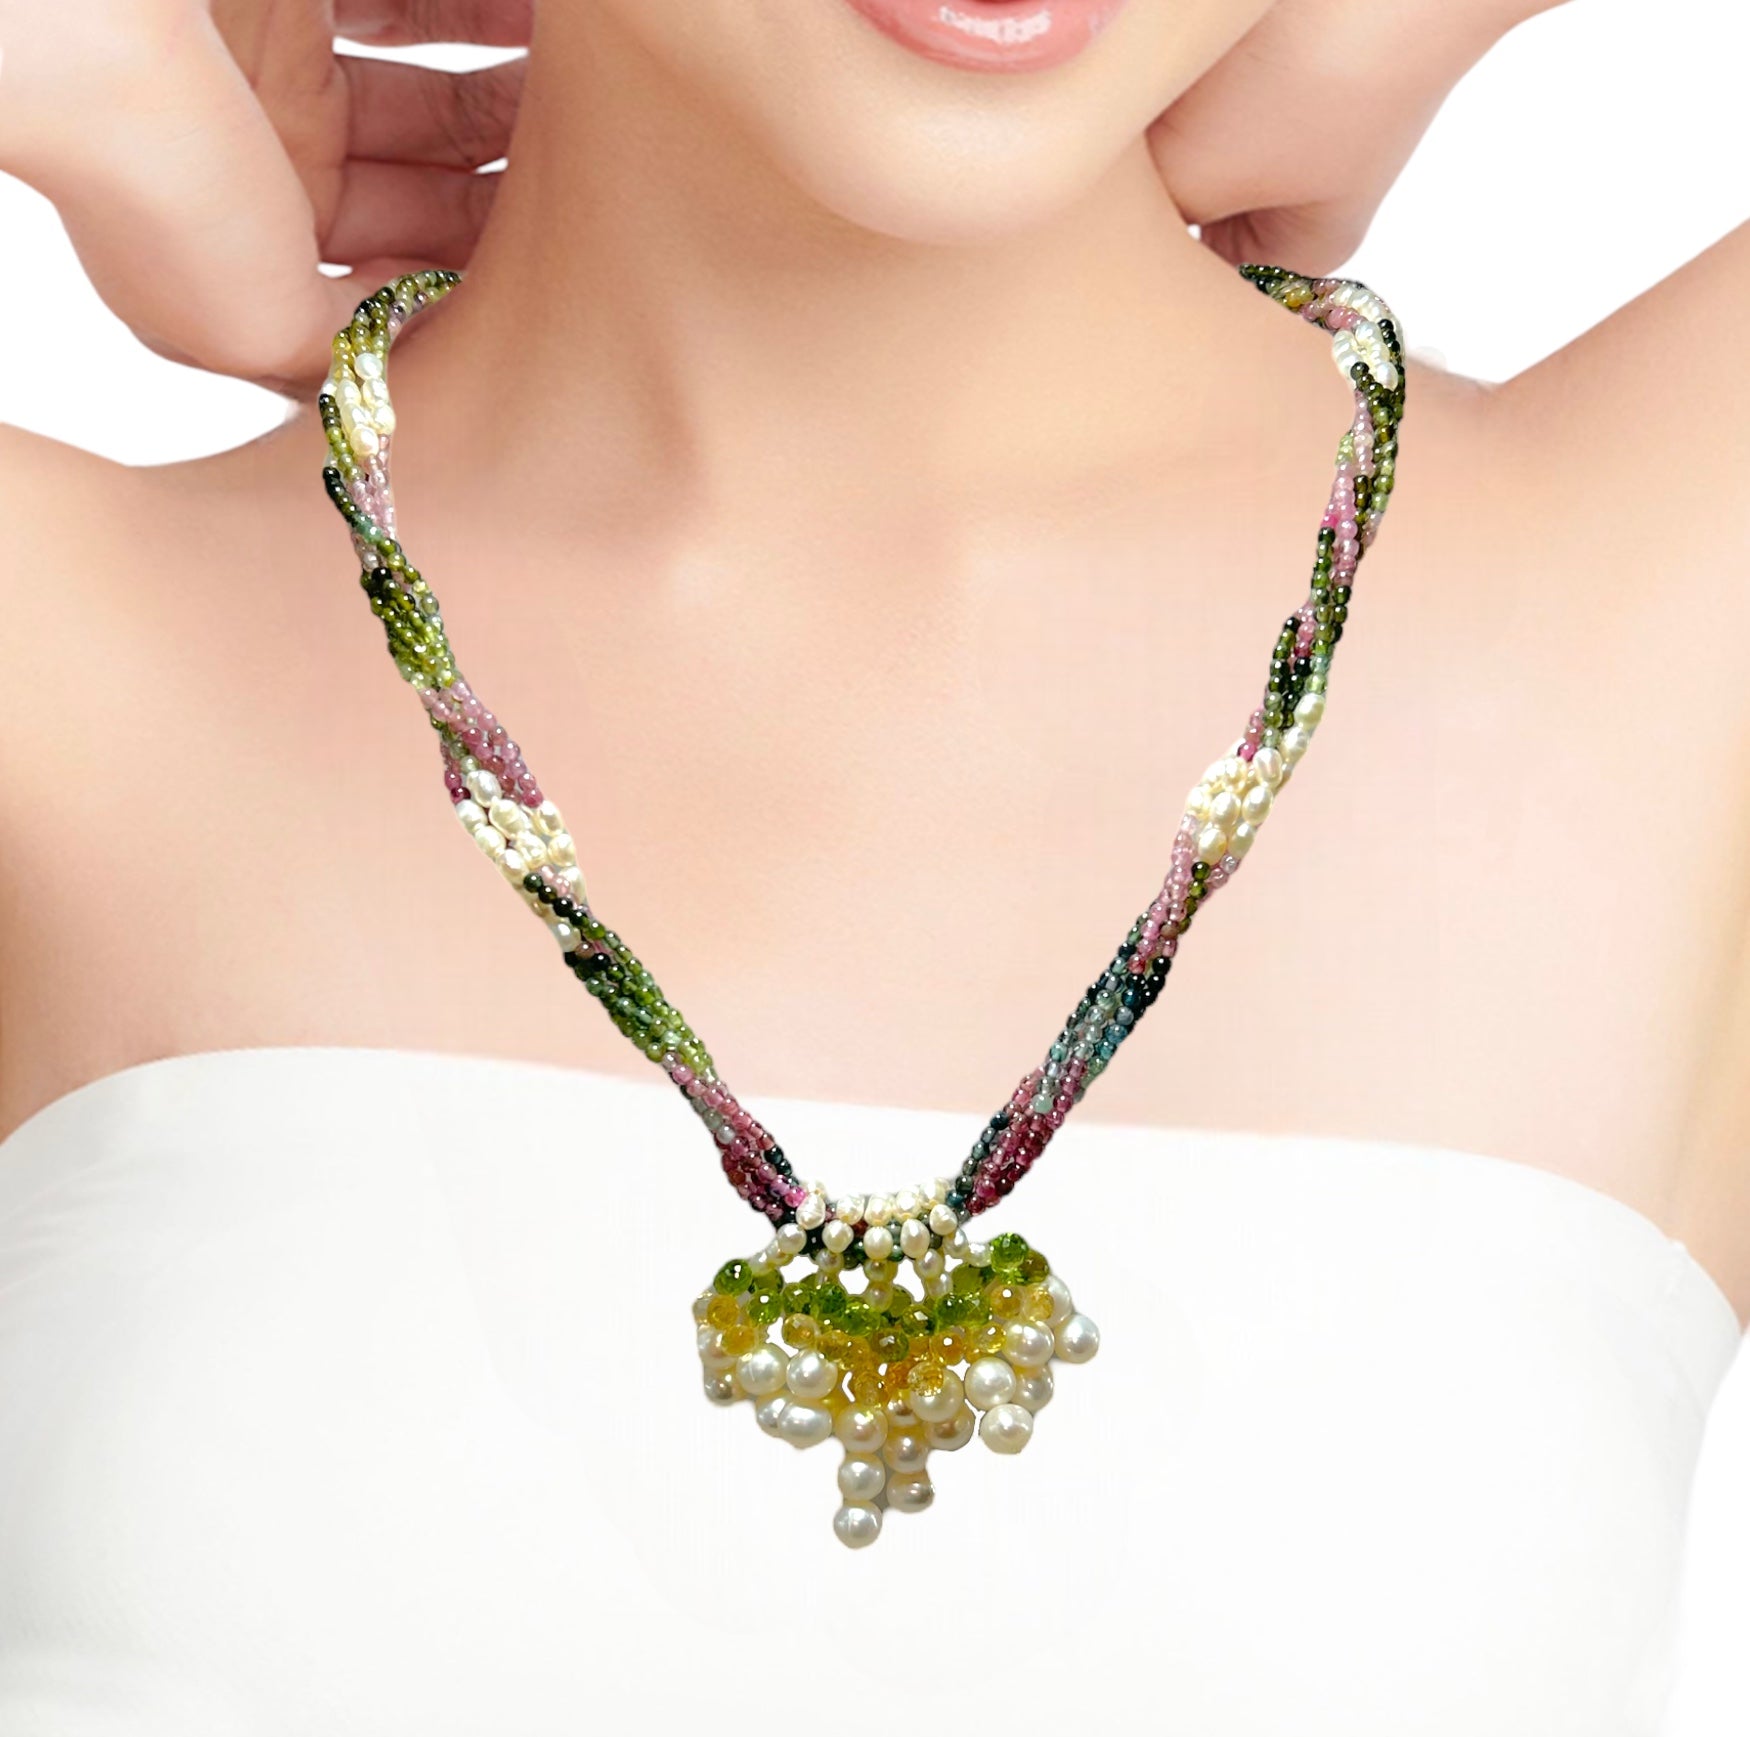 Natural Handmade Necklace 16"-18" Pearls, Tourmaline, Citrine, Peridot Gemstone Beads Jewellery